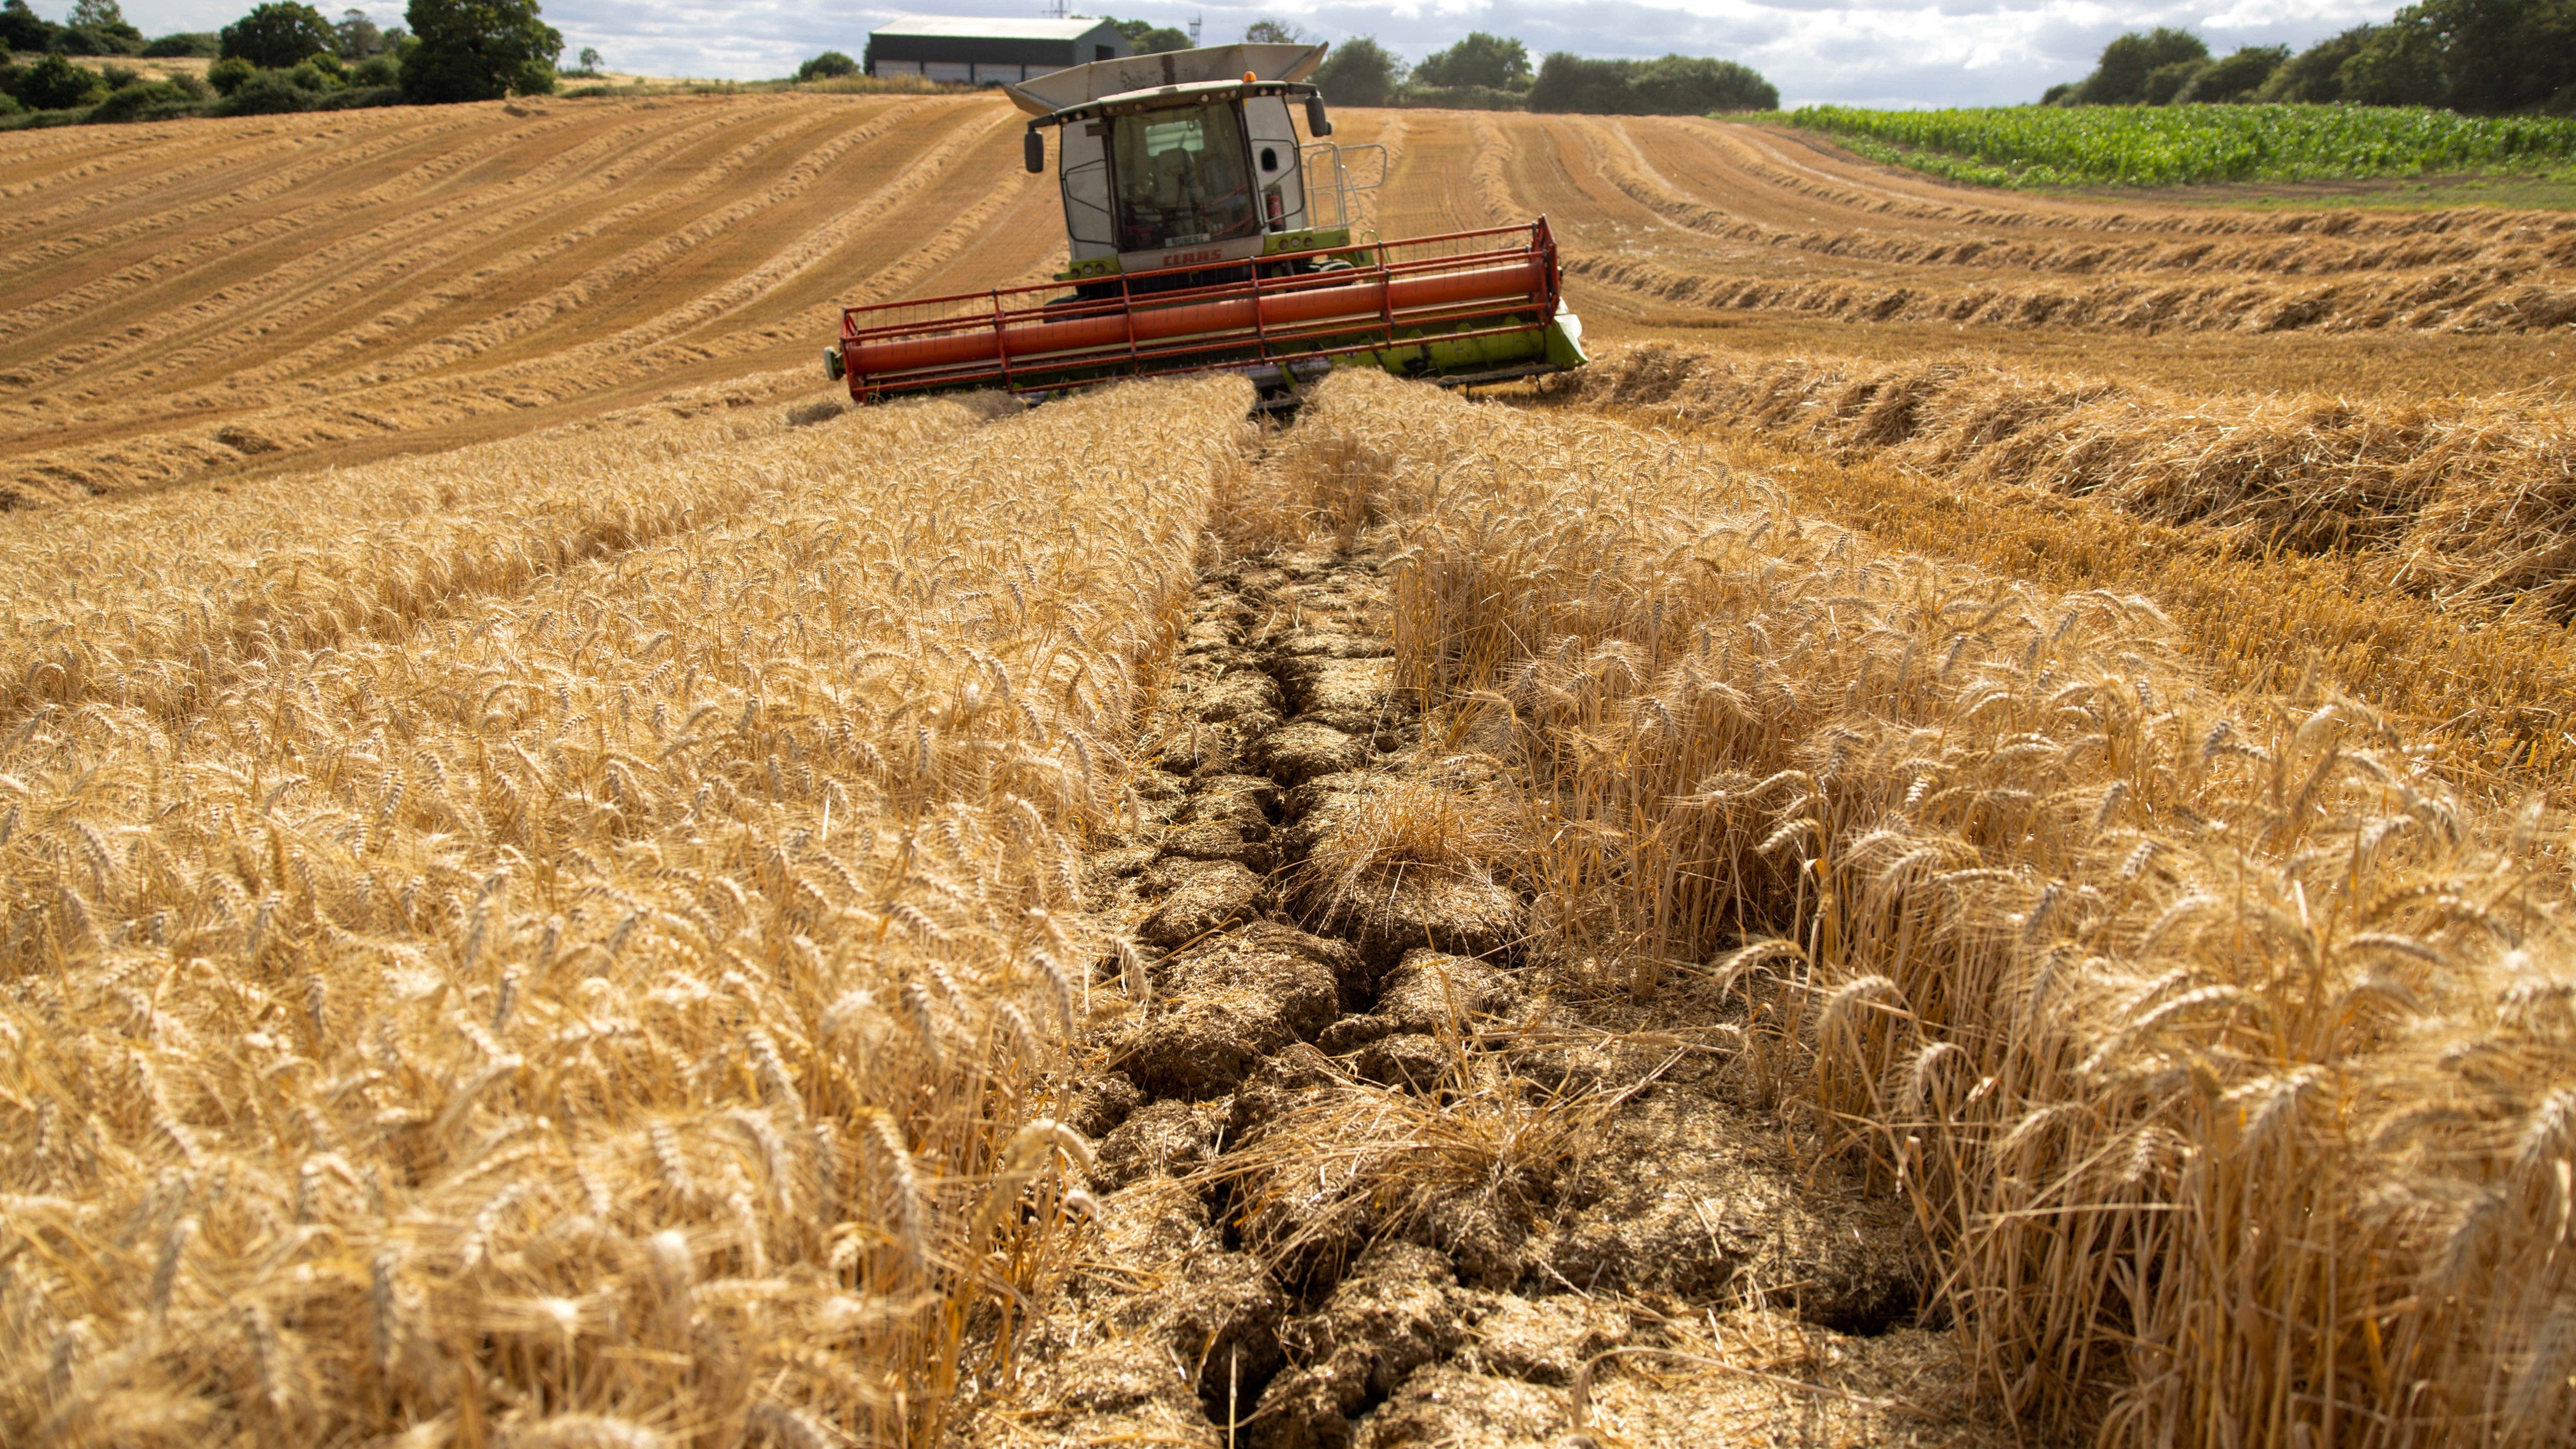 Agriculture worldwide faces multiple stresses, says Professor Stephen Euston of Heriot-Watt University